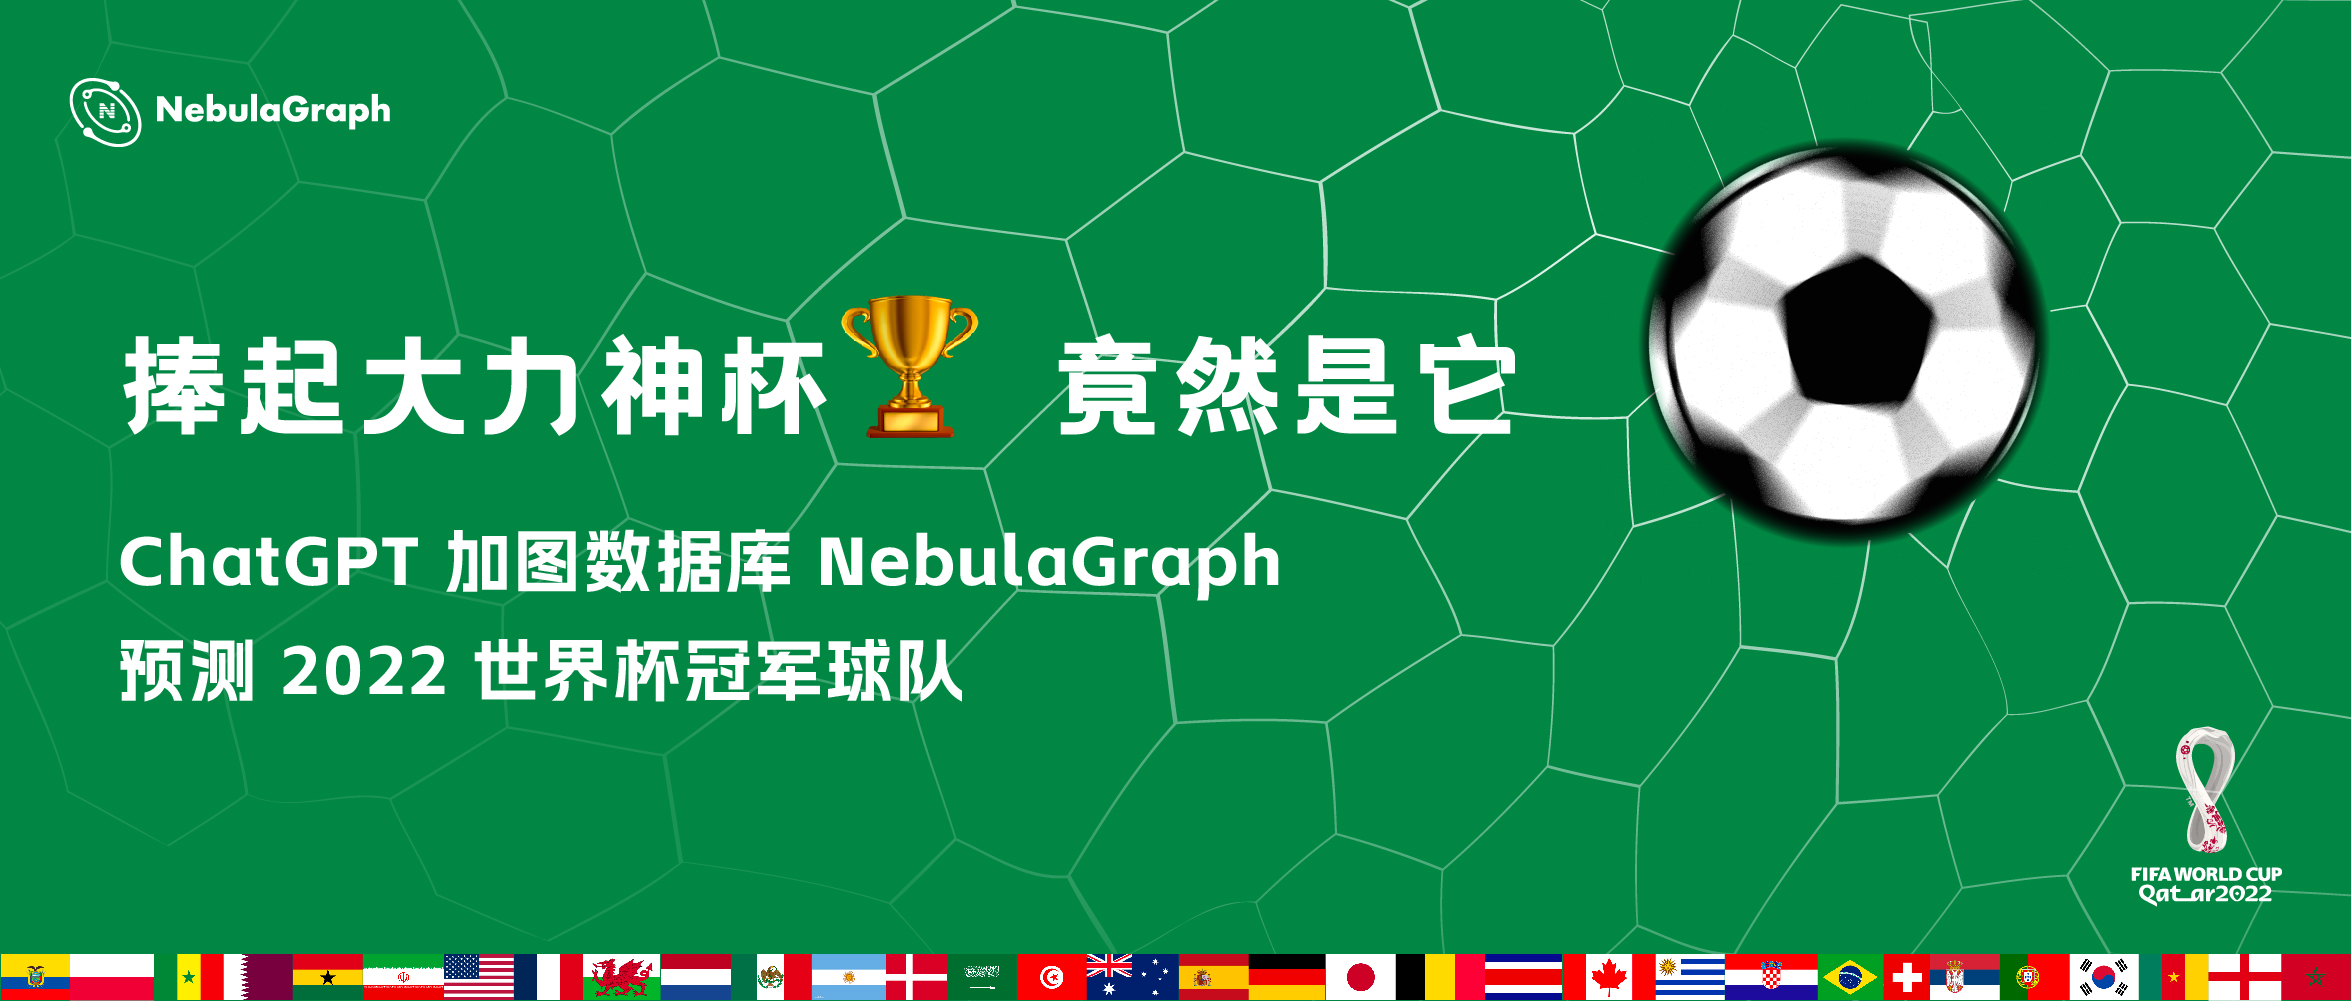 ChatGPT 加图数据库 NebulaGraph 预测 2022 世界杯冠军球队